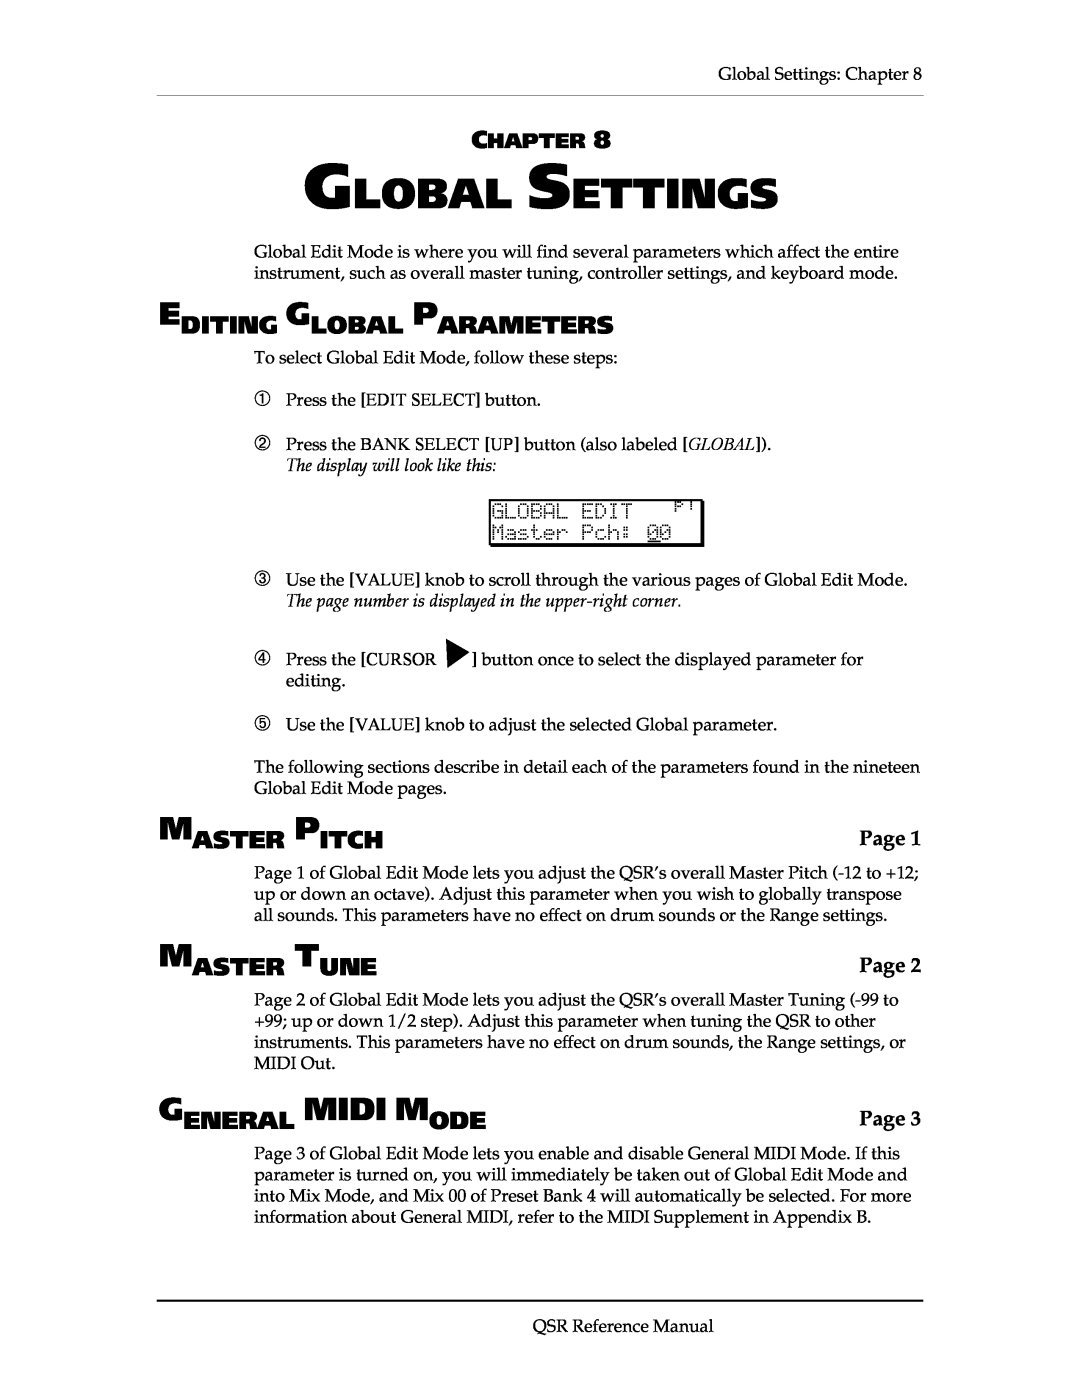 Alesis QSR 64 manual Global Settings, Editing Global Parameters, Master Pitch, Master Tune, General Midi Mode, Page 